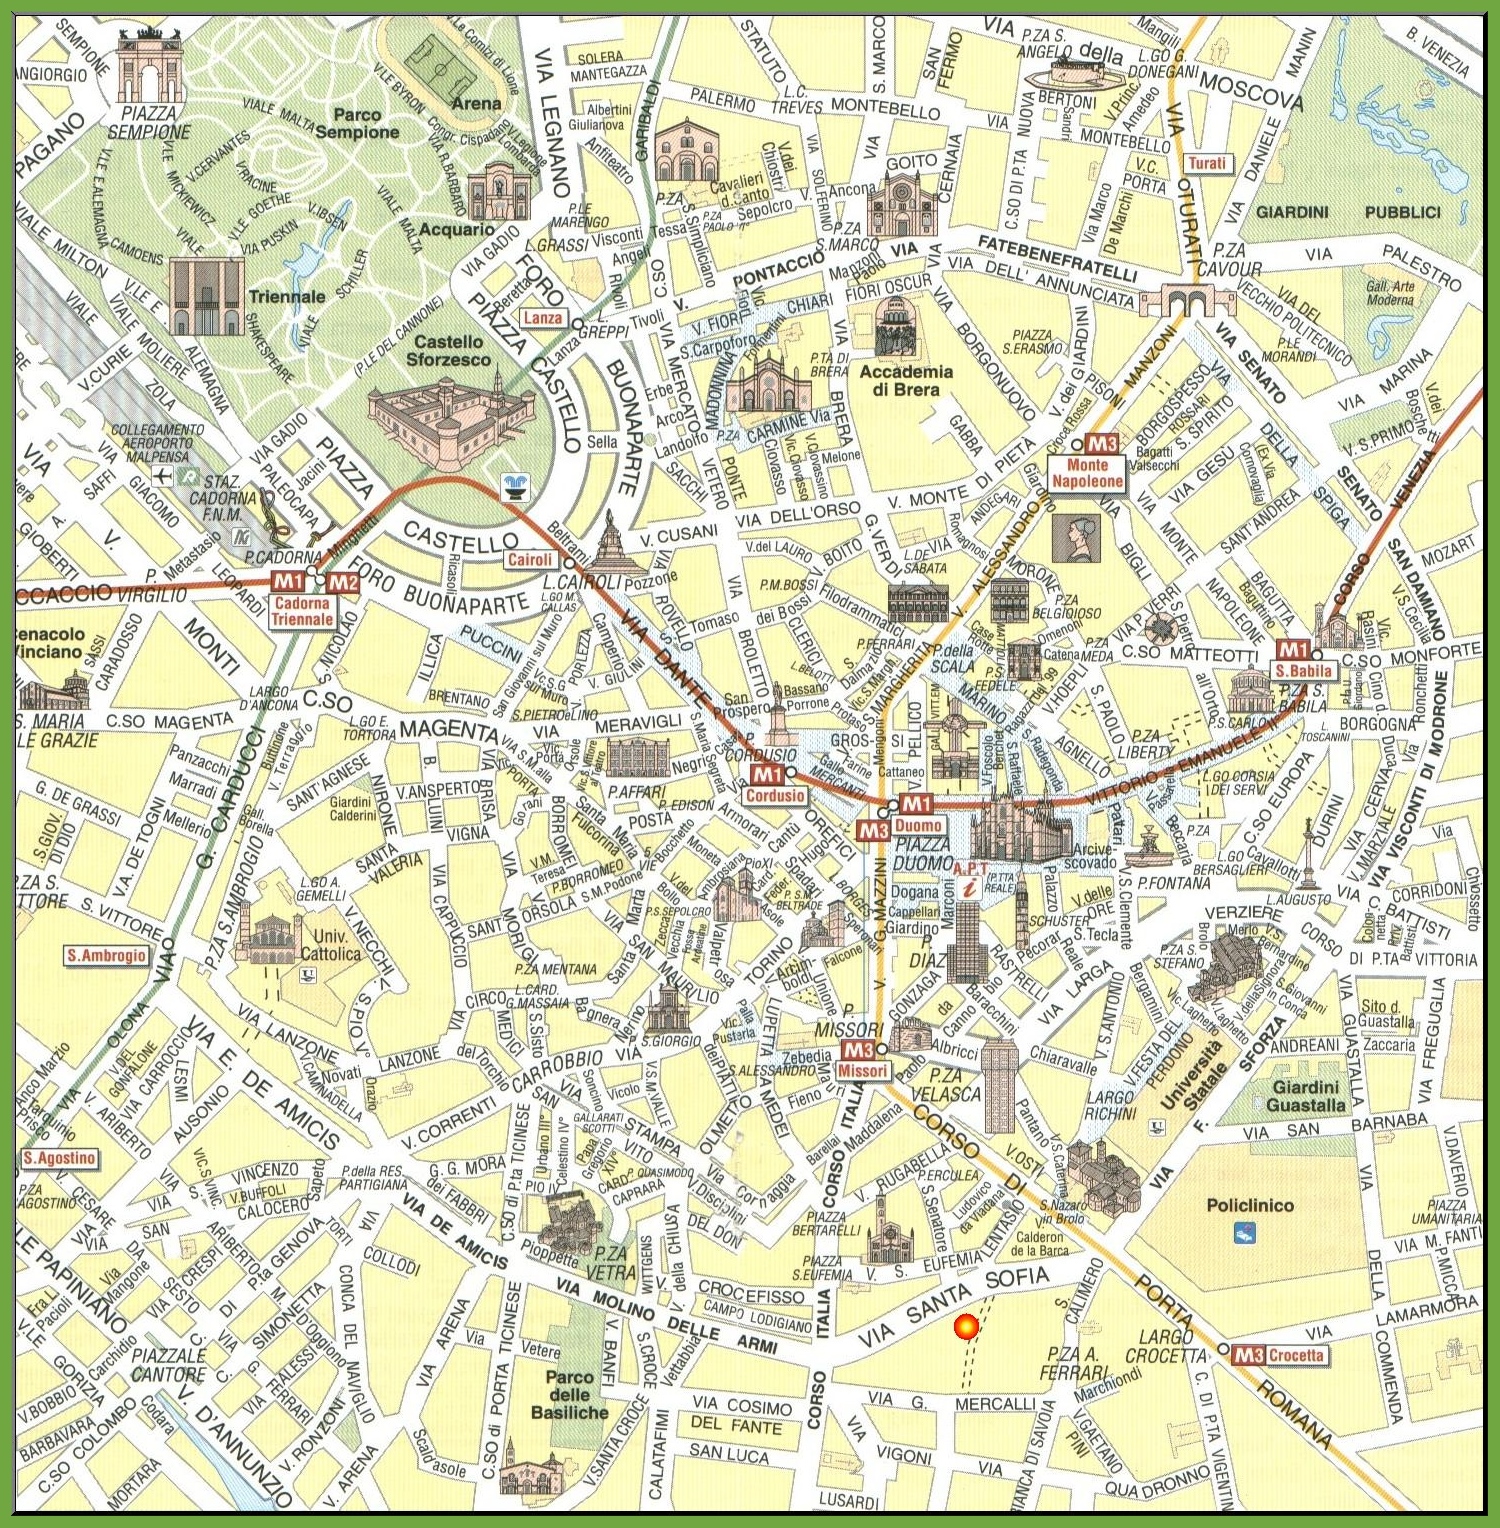 Milan travel map - Ontheworldmap.com